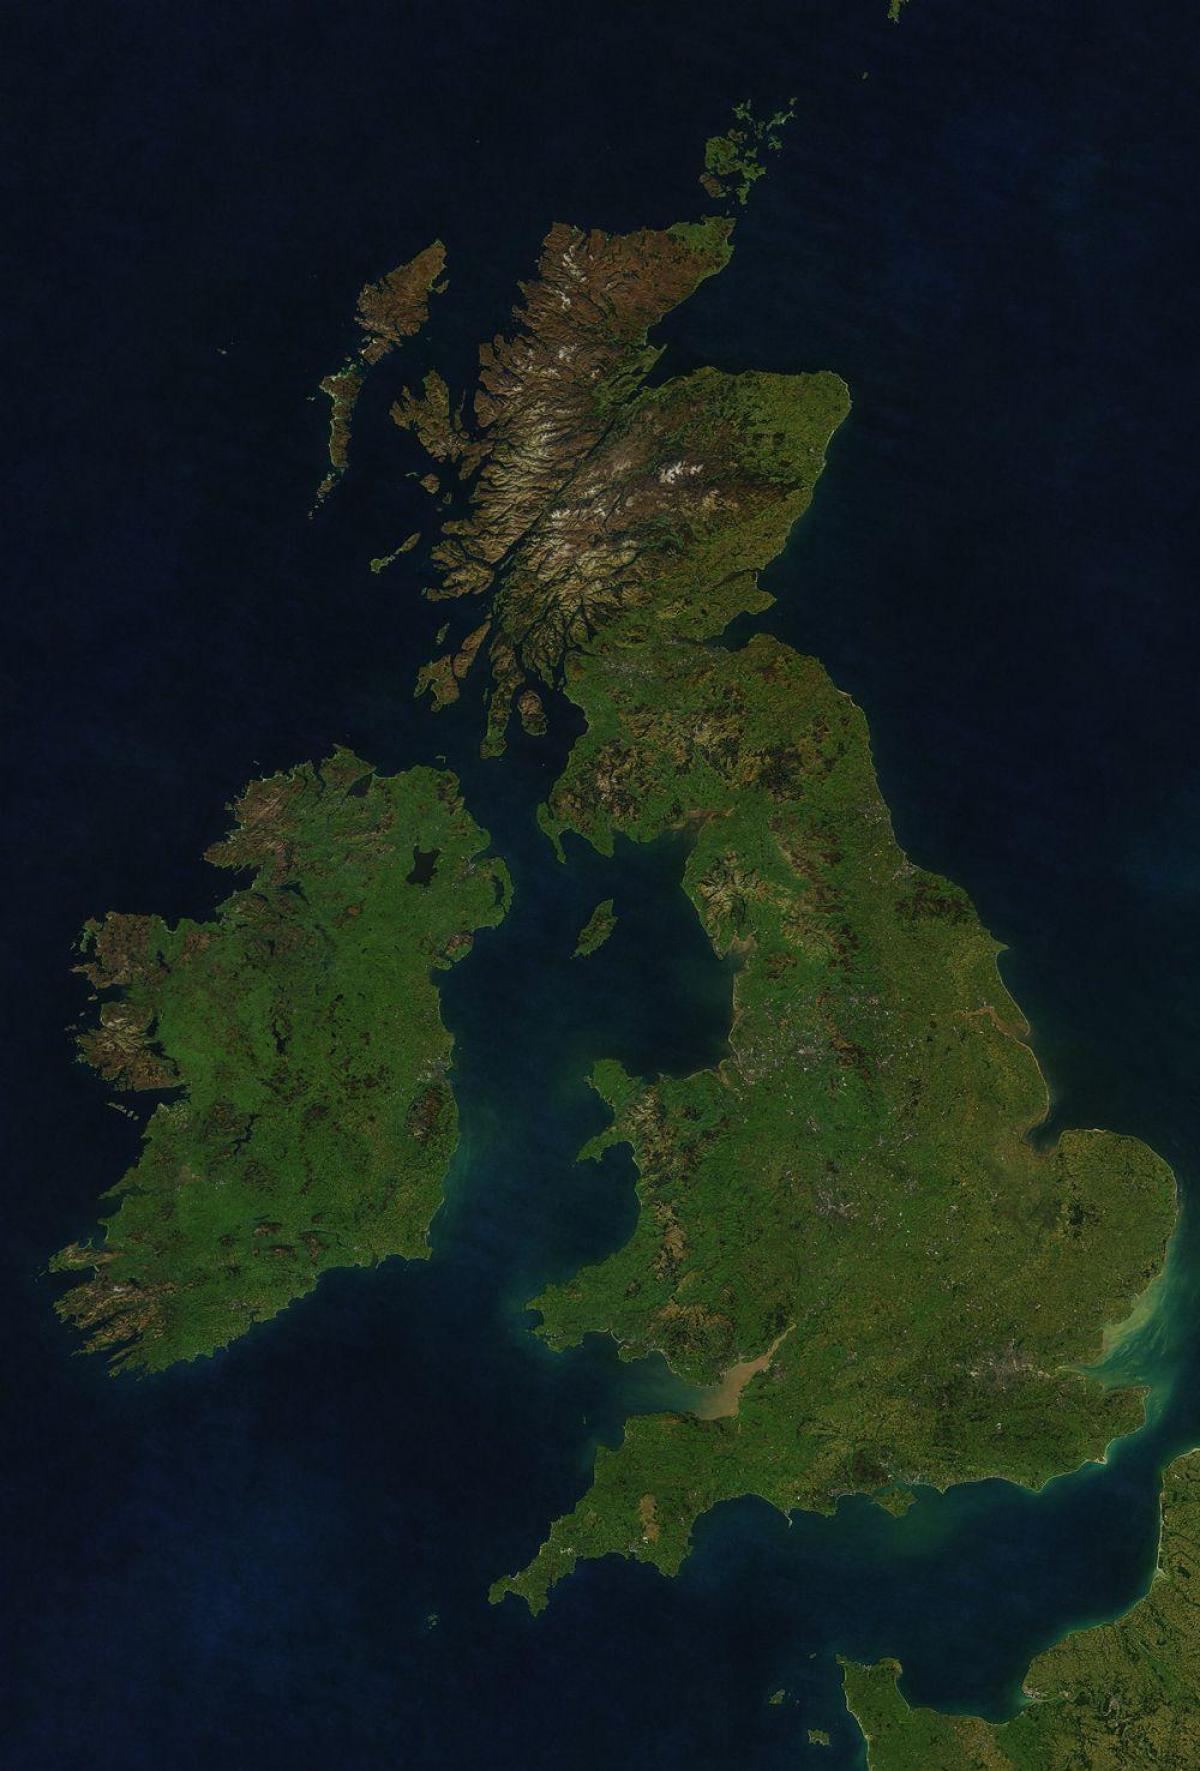 Reino Unido (UK) sky view map